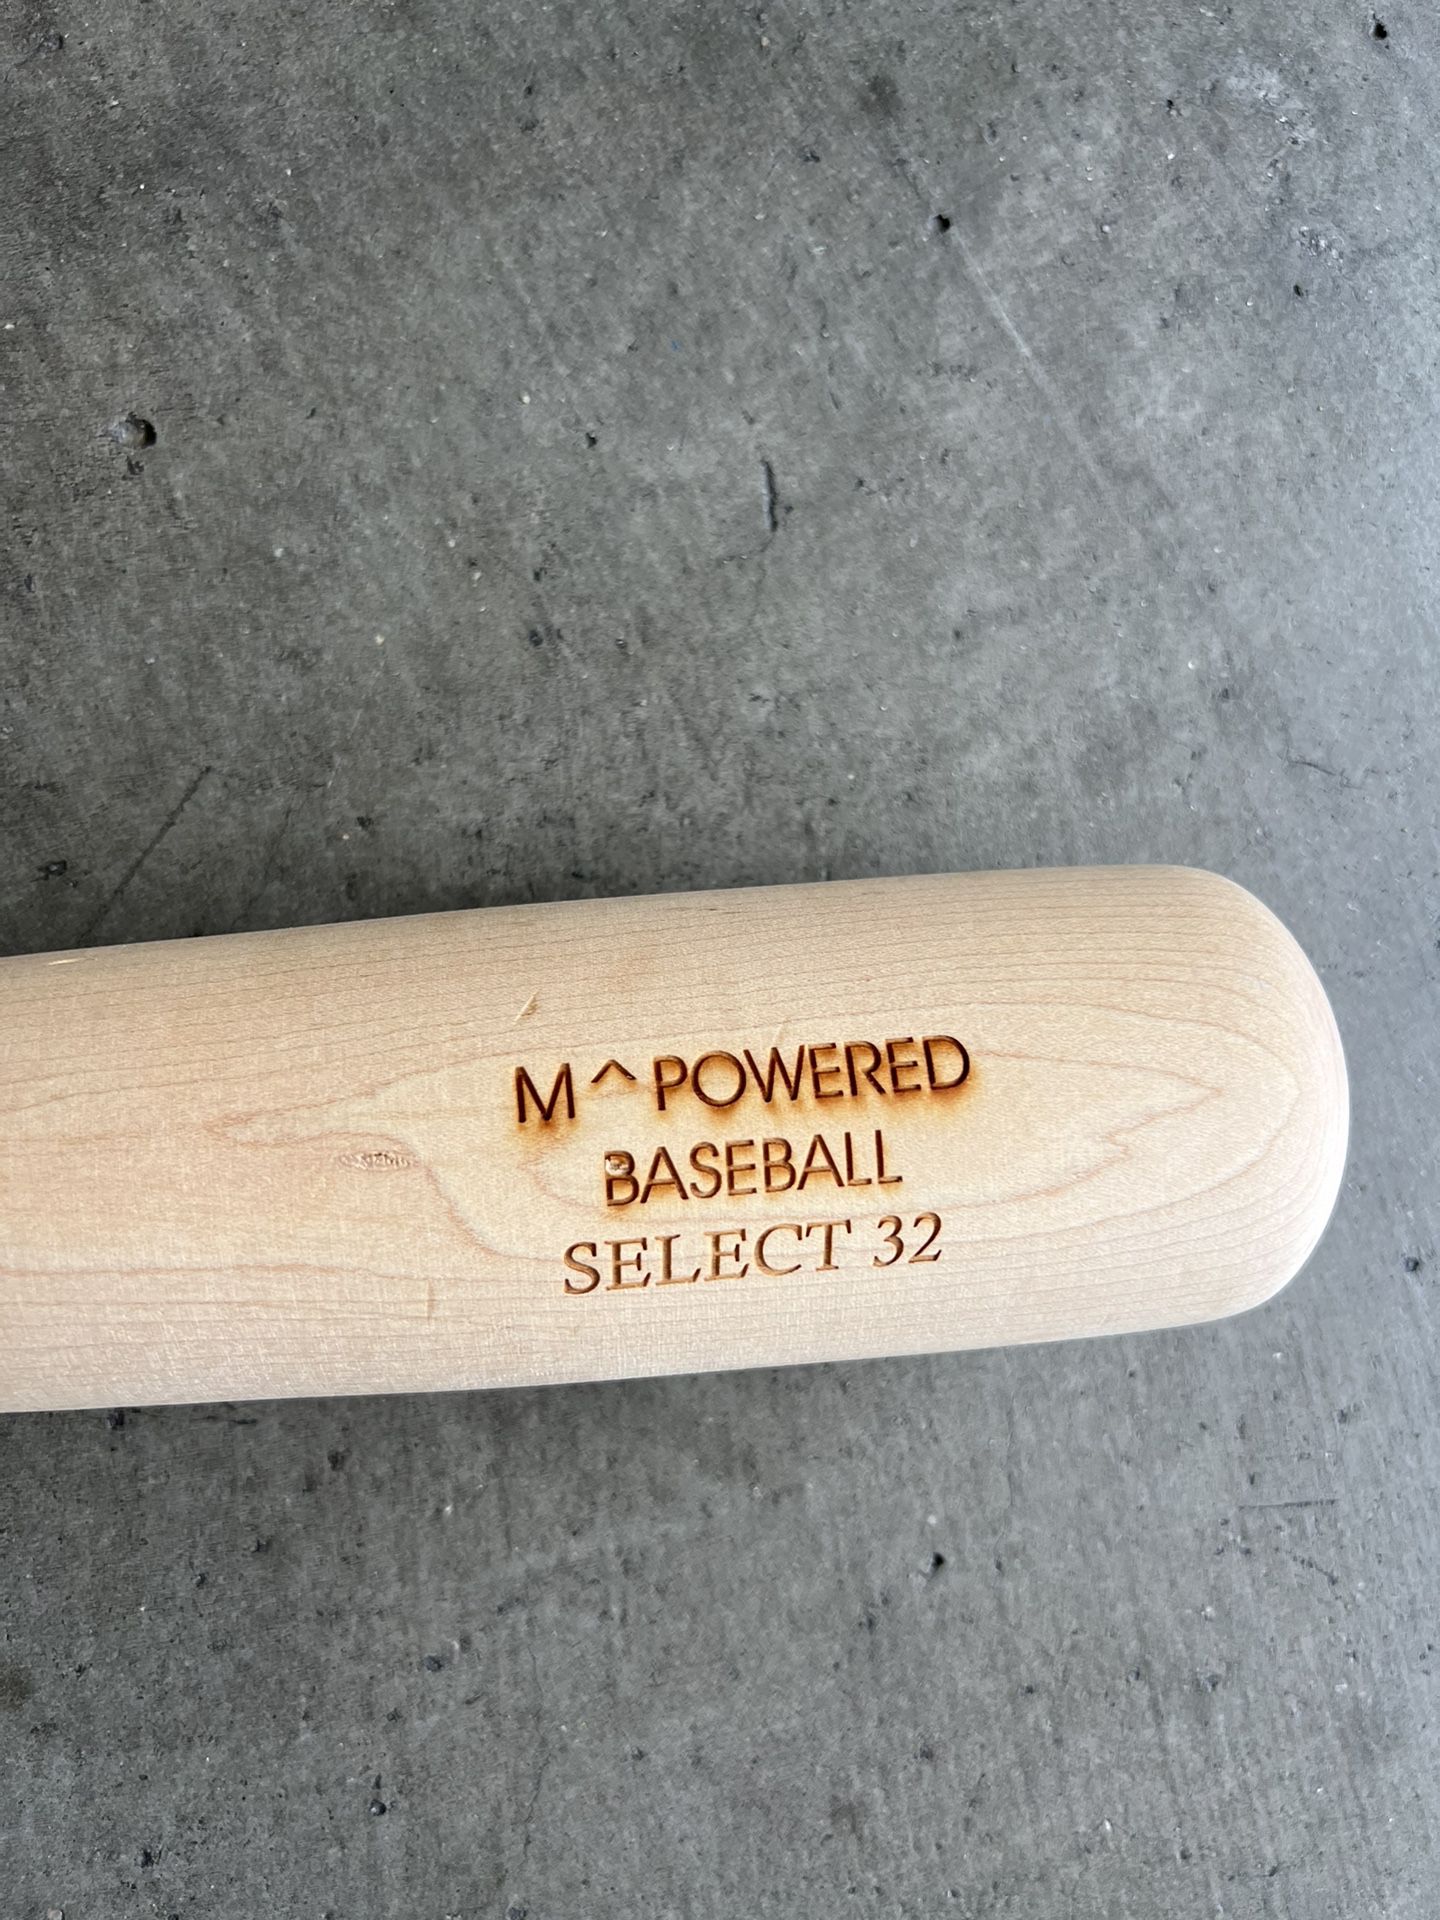 M^Powered Baseball Bat  32”